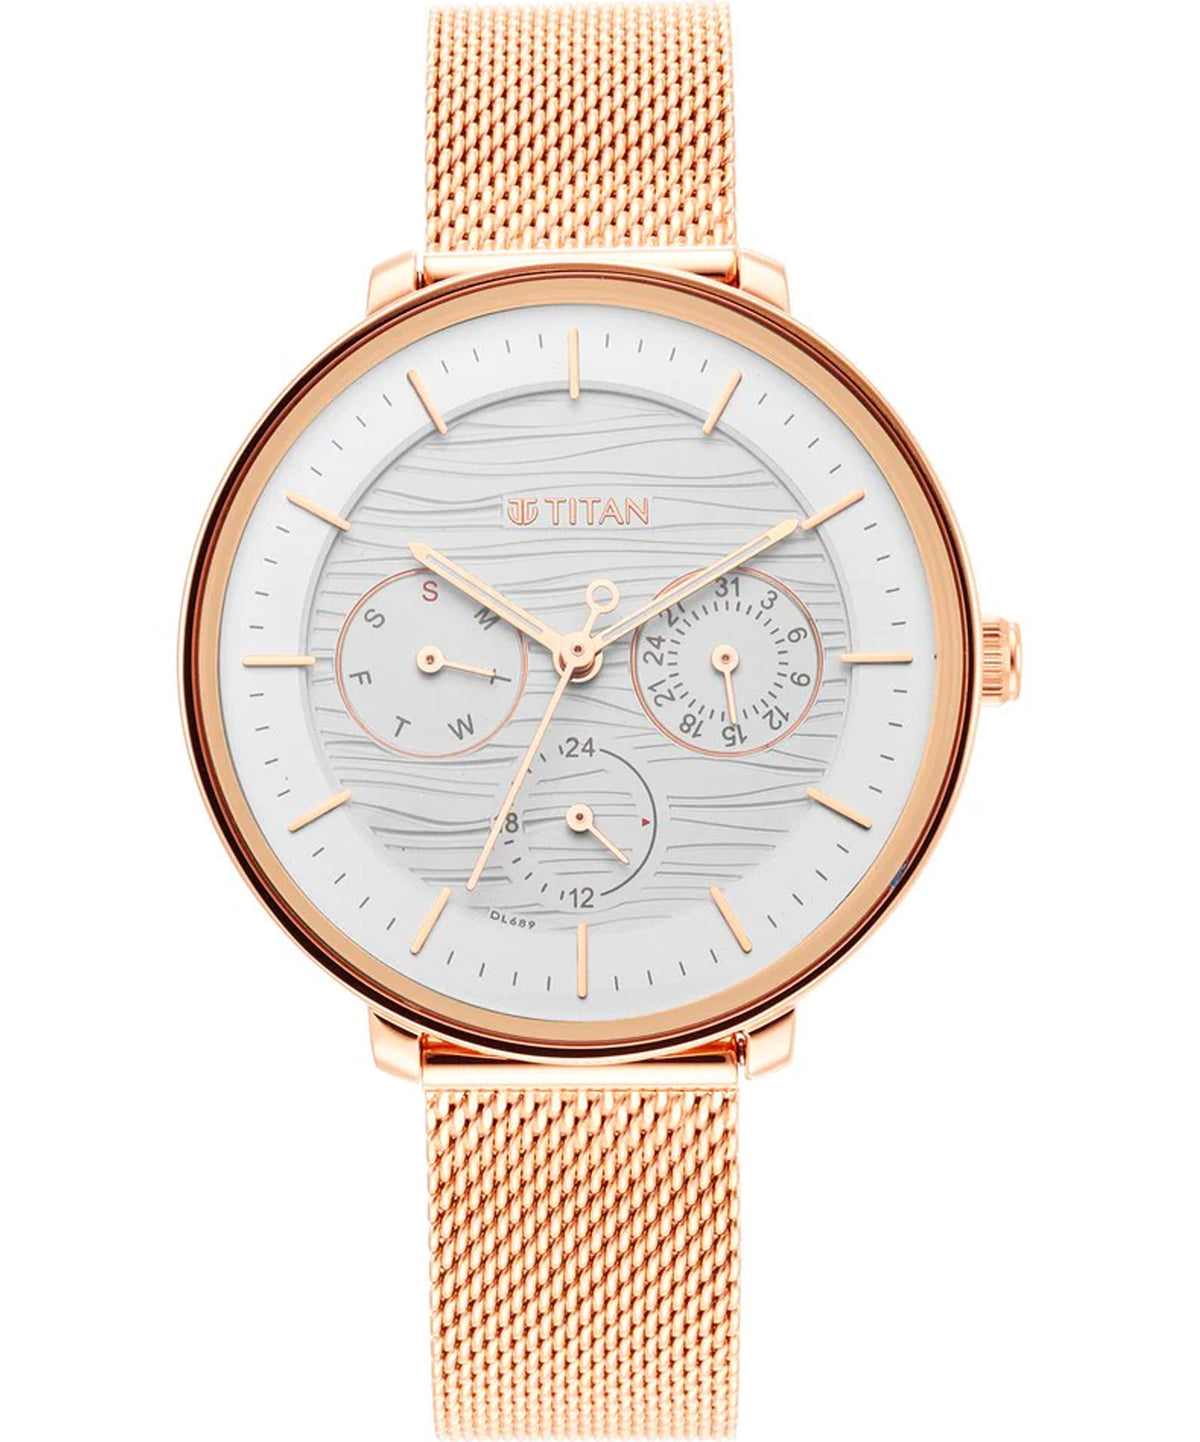 Titan Women's Watch Silver Dial Rose Gold Stainless Steel Strap Watch, 2651WM02